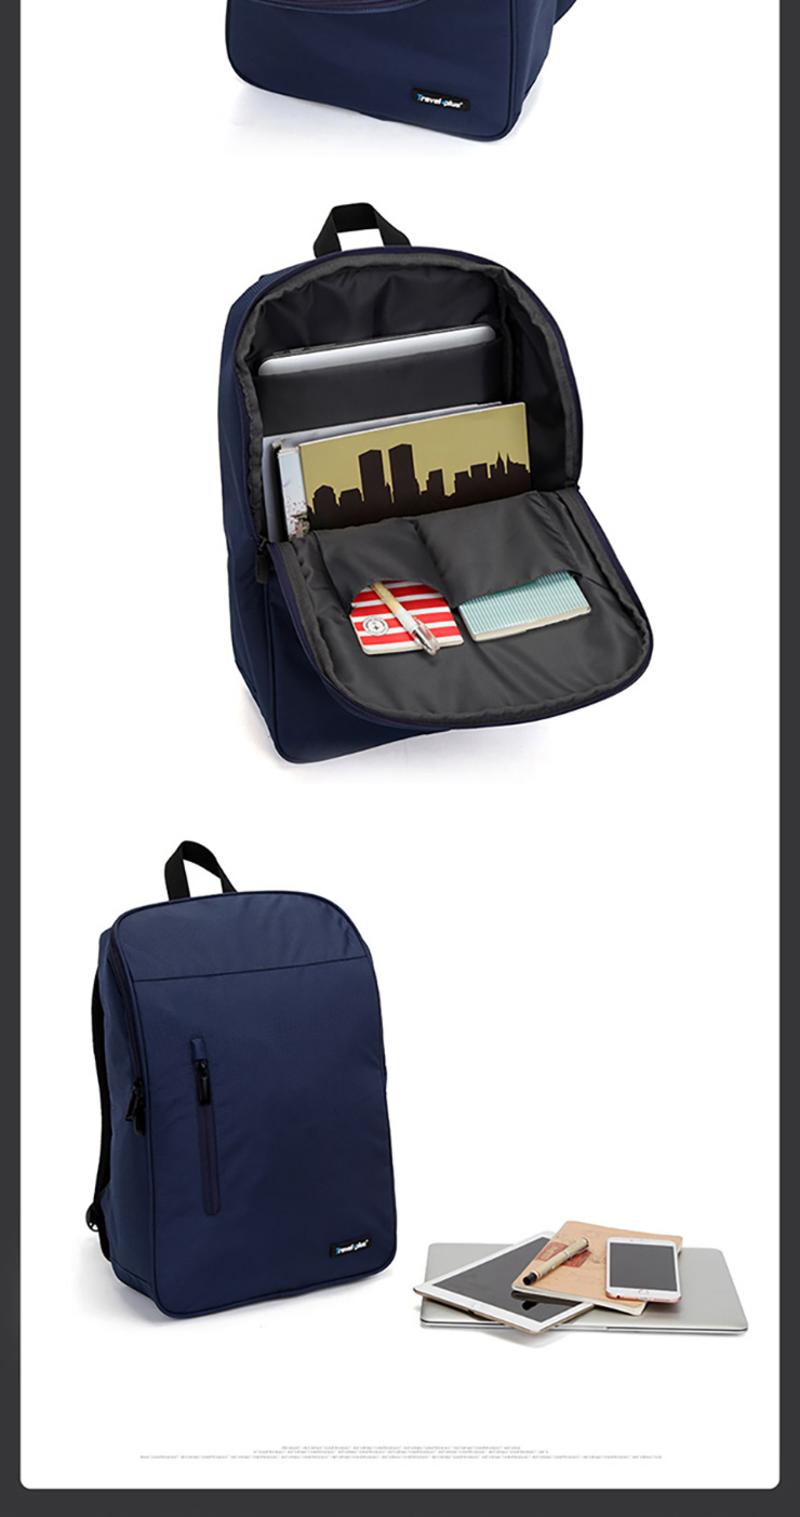 Travel Plus旅行家2016新品极致简约商务双肩背包 TPG001蓝色